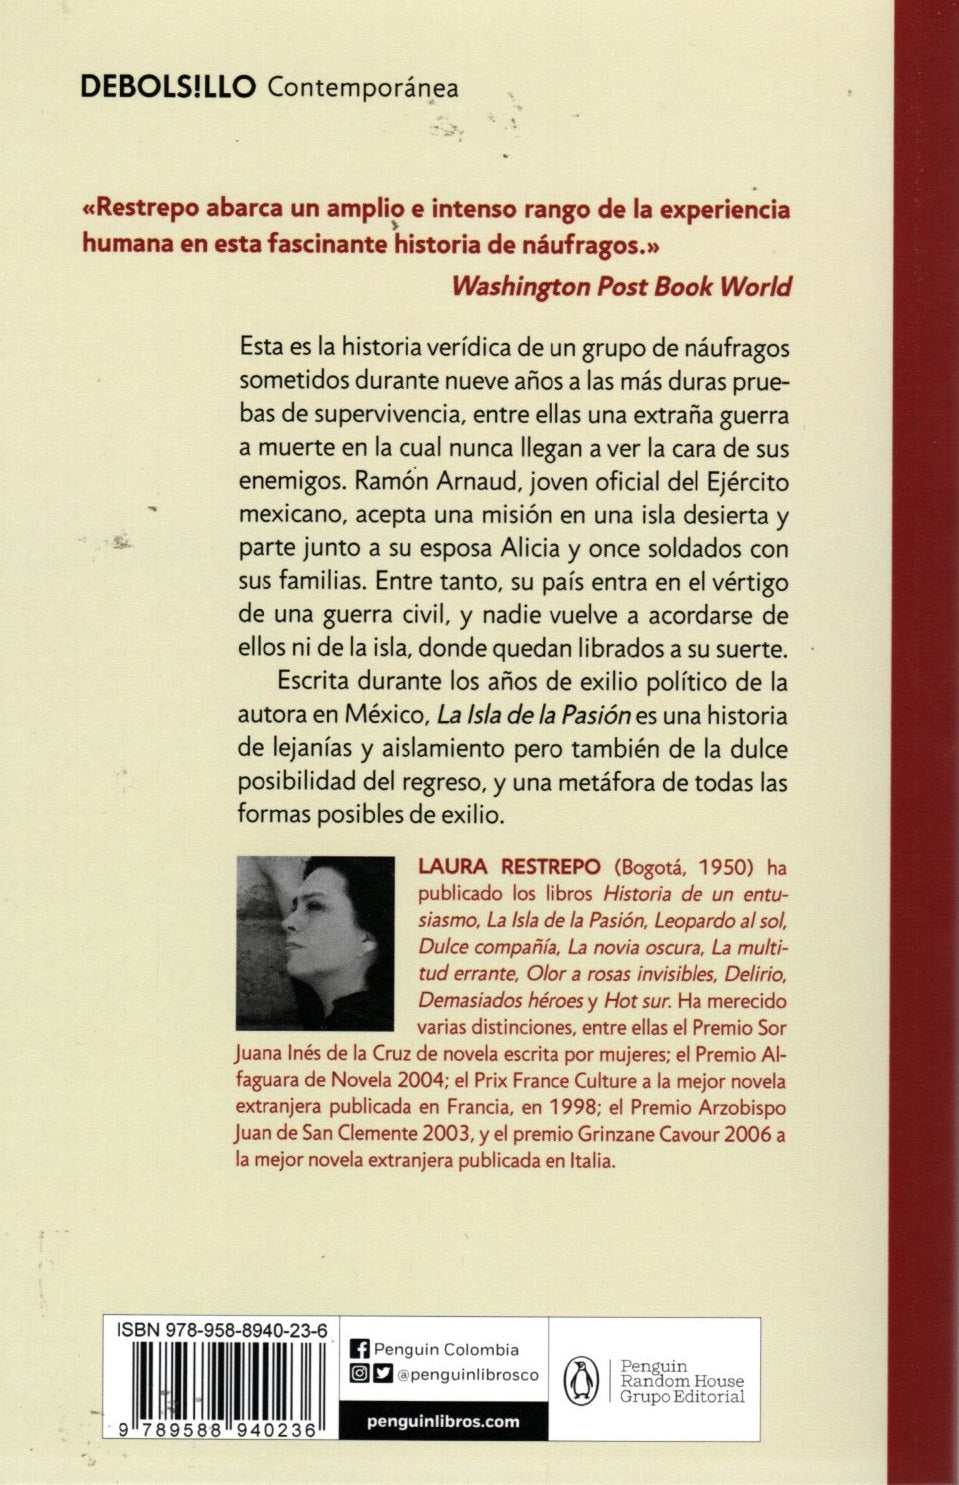 Libro Laura Restrepo - La Isla De La Pasión